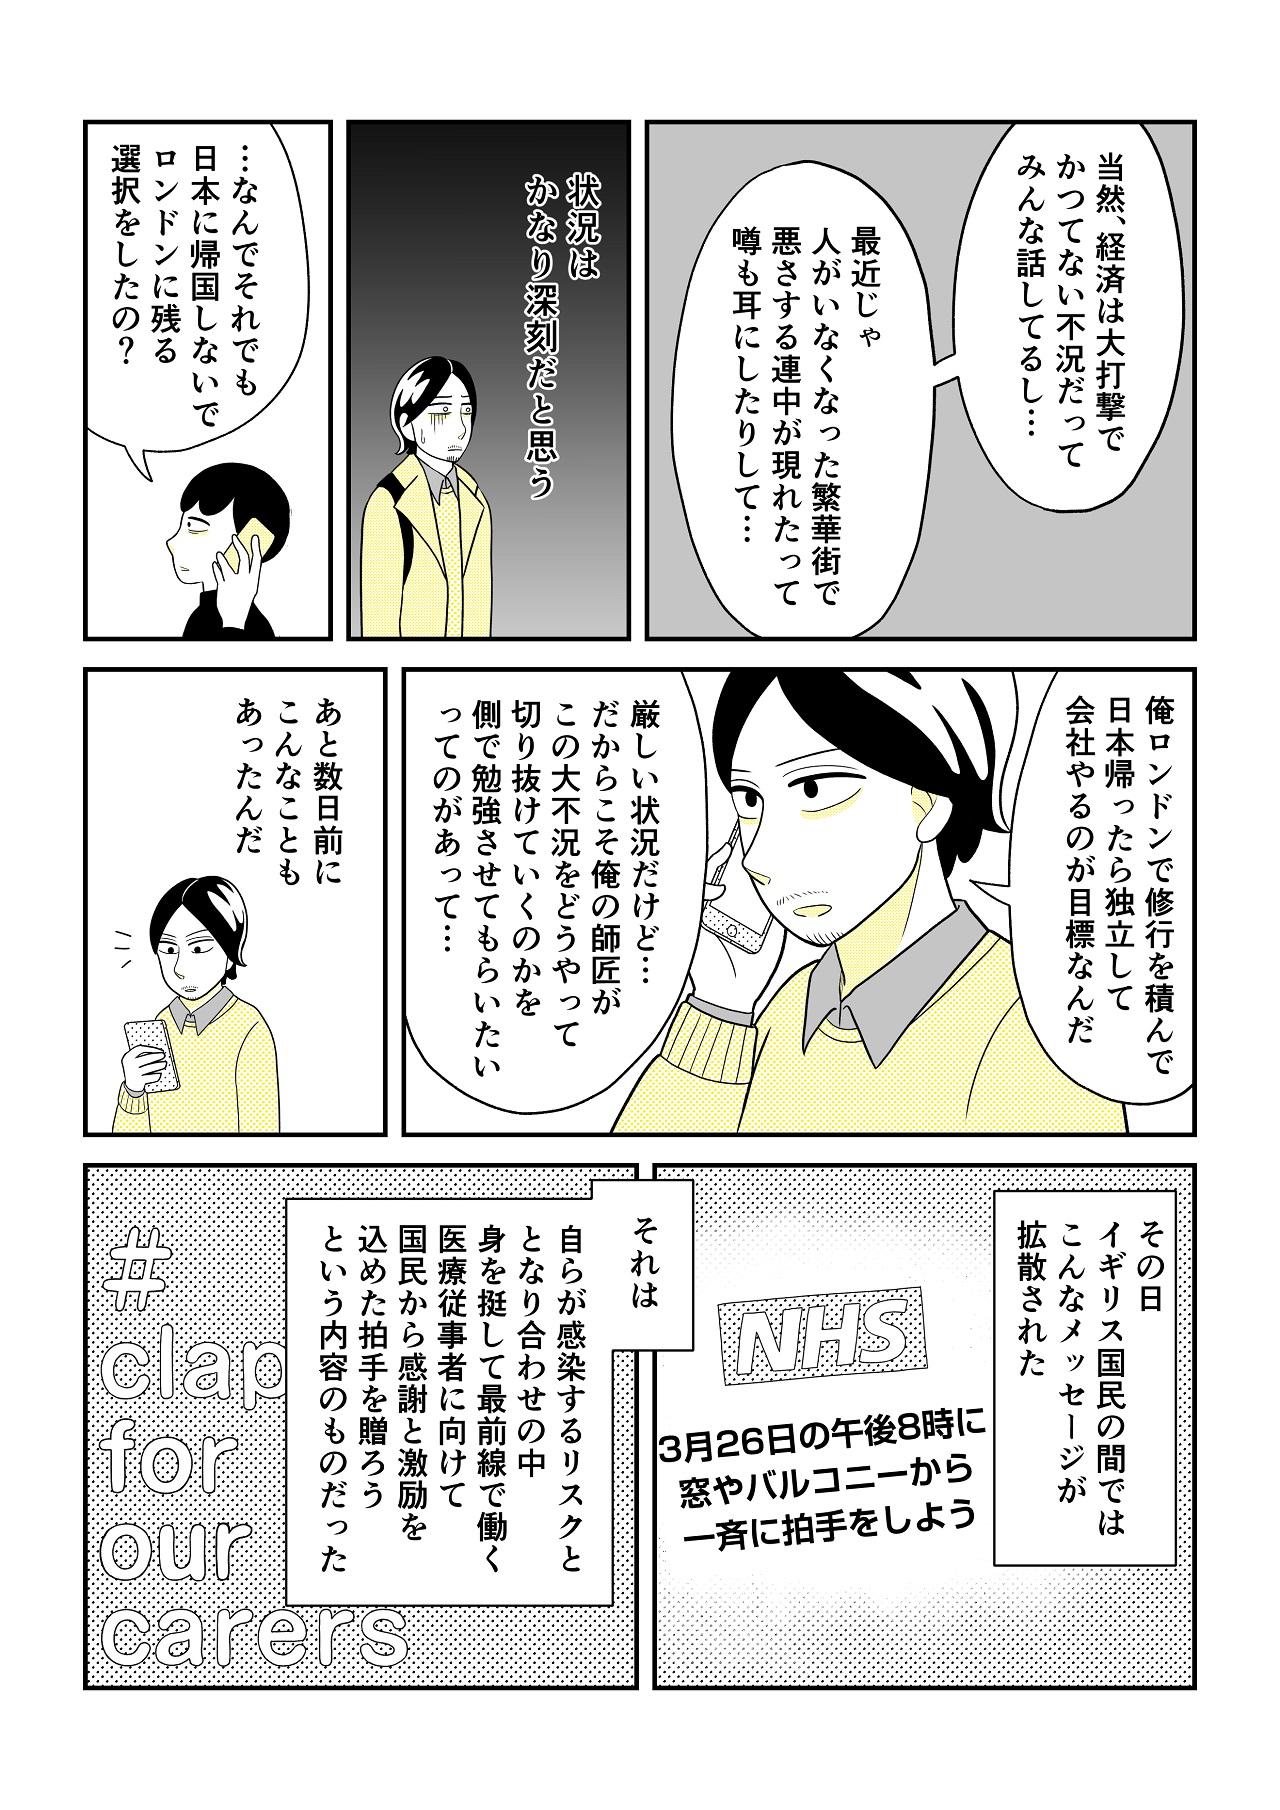 https://www.ryugaku.co.jp/column/images/sp_04_1280.jpg